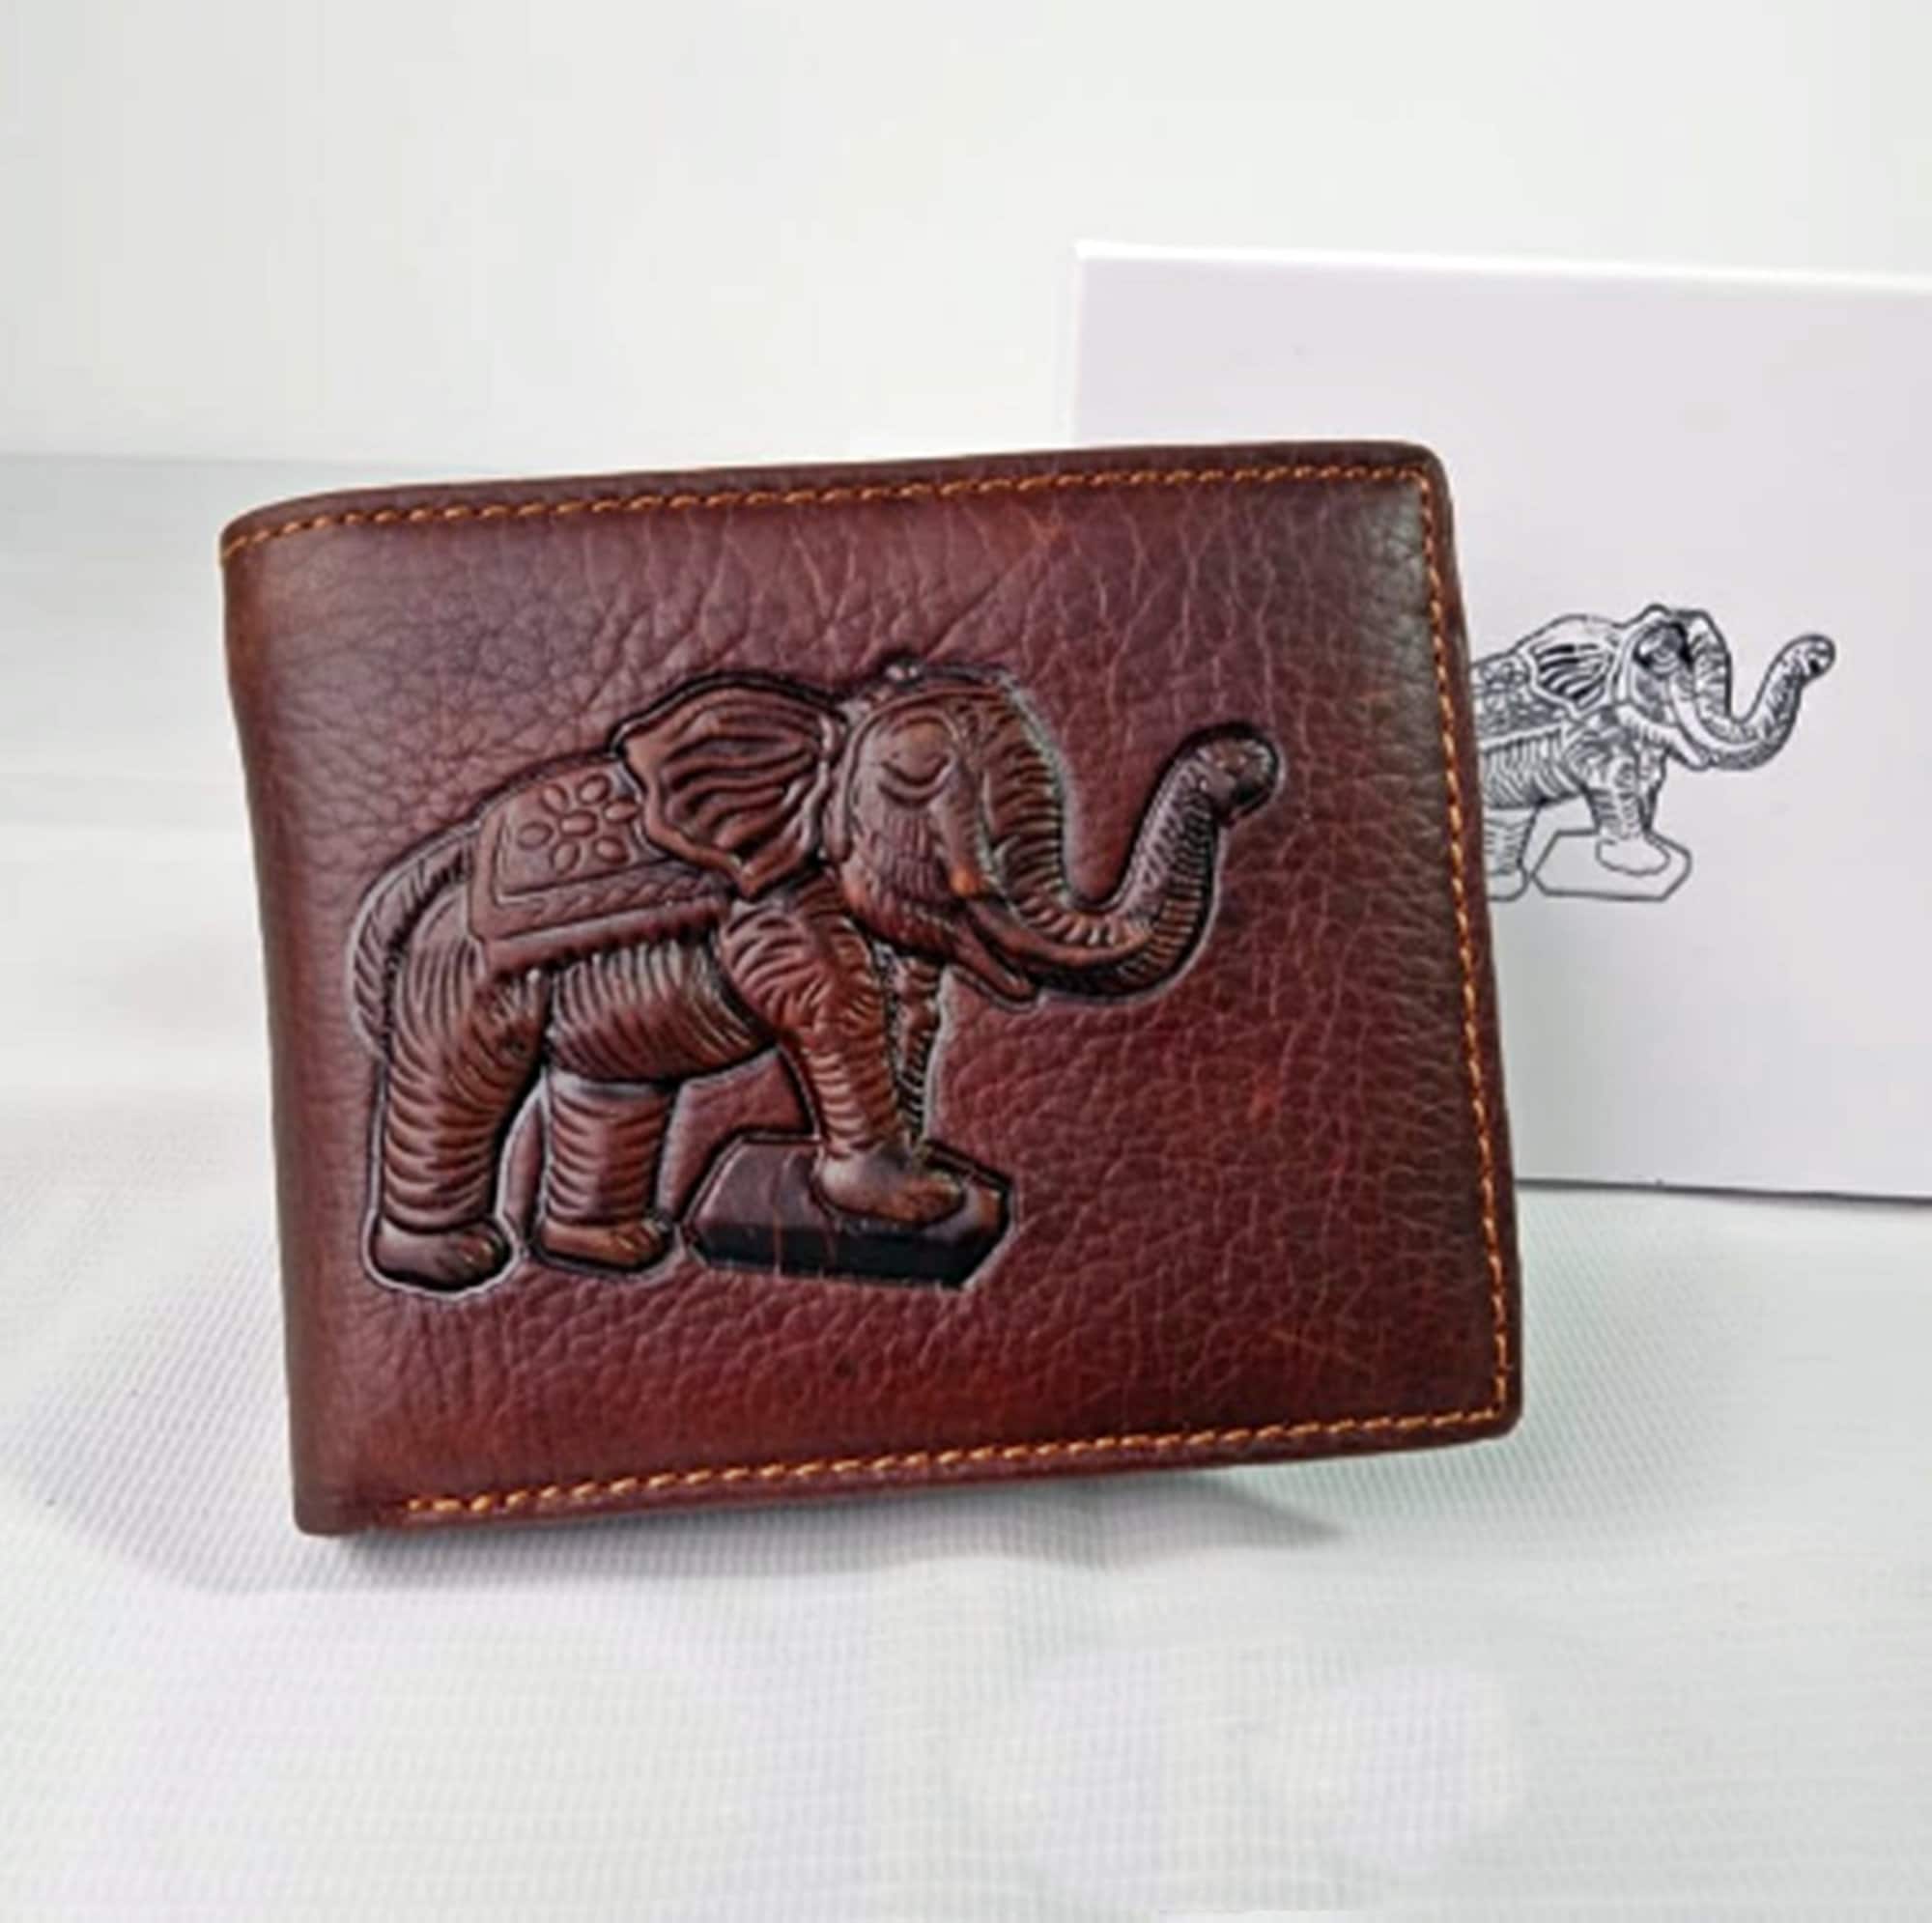 Salvatore Ferragamo Elephant-Print Leather Wallet, Navy